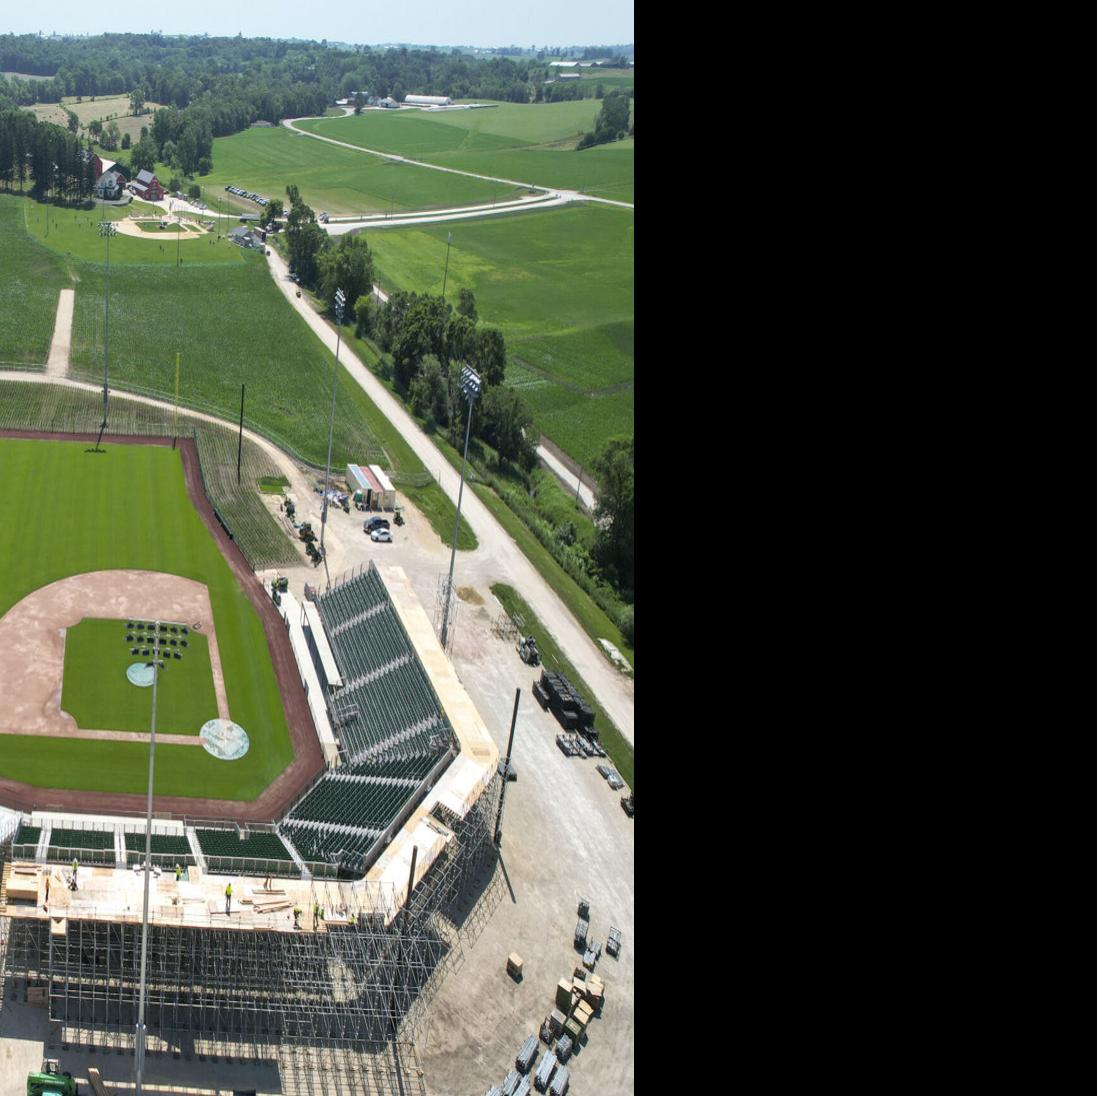 Cedar Rapids Kernels to play at Field of Dreams